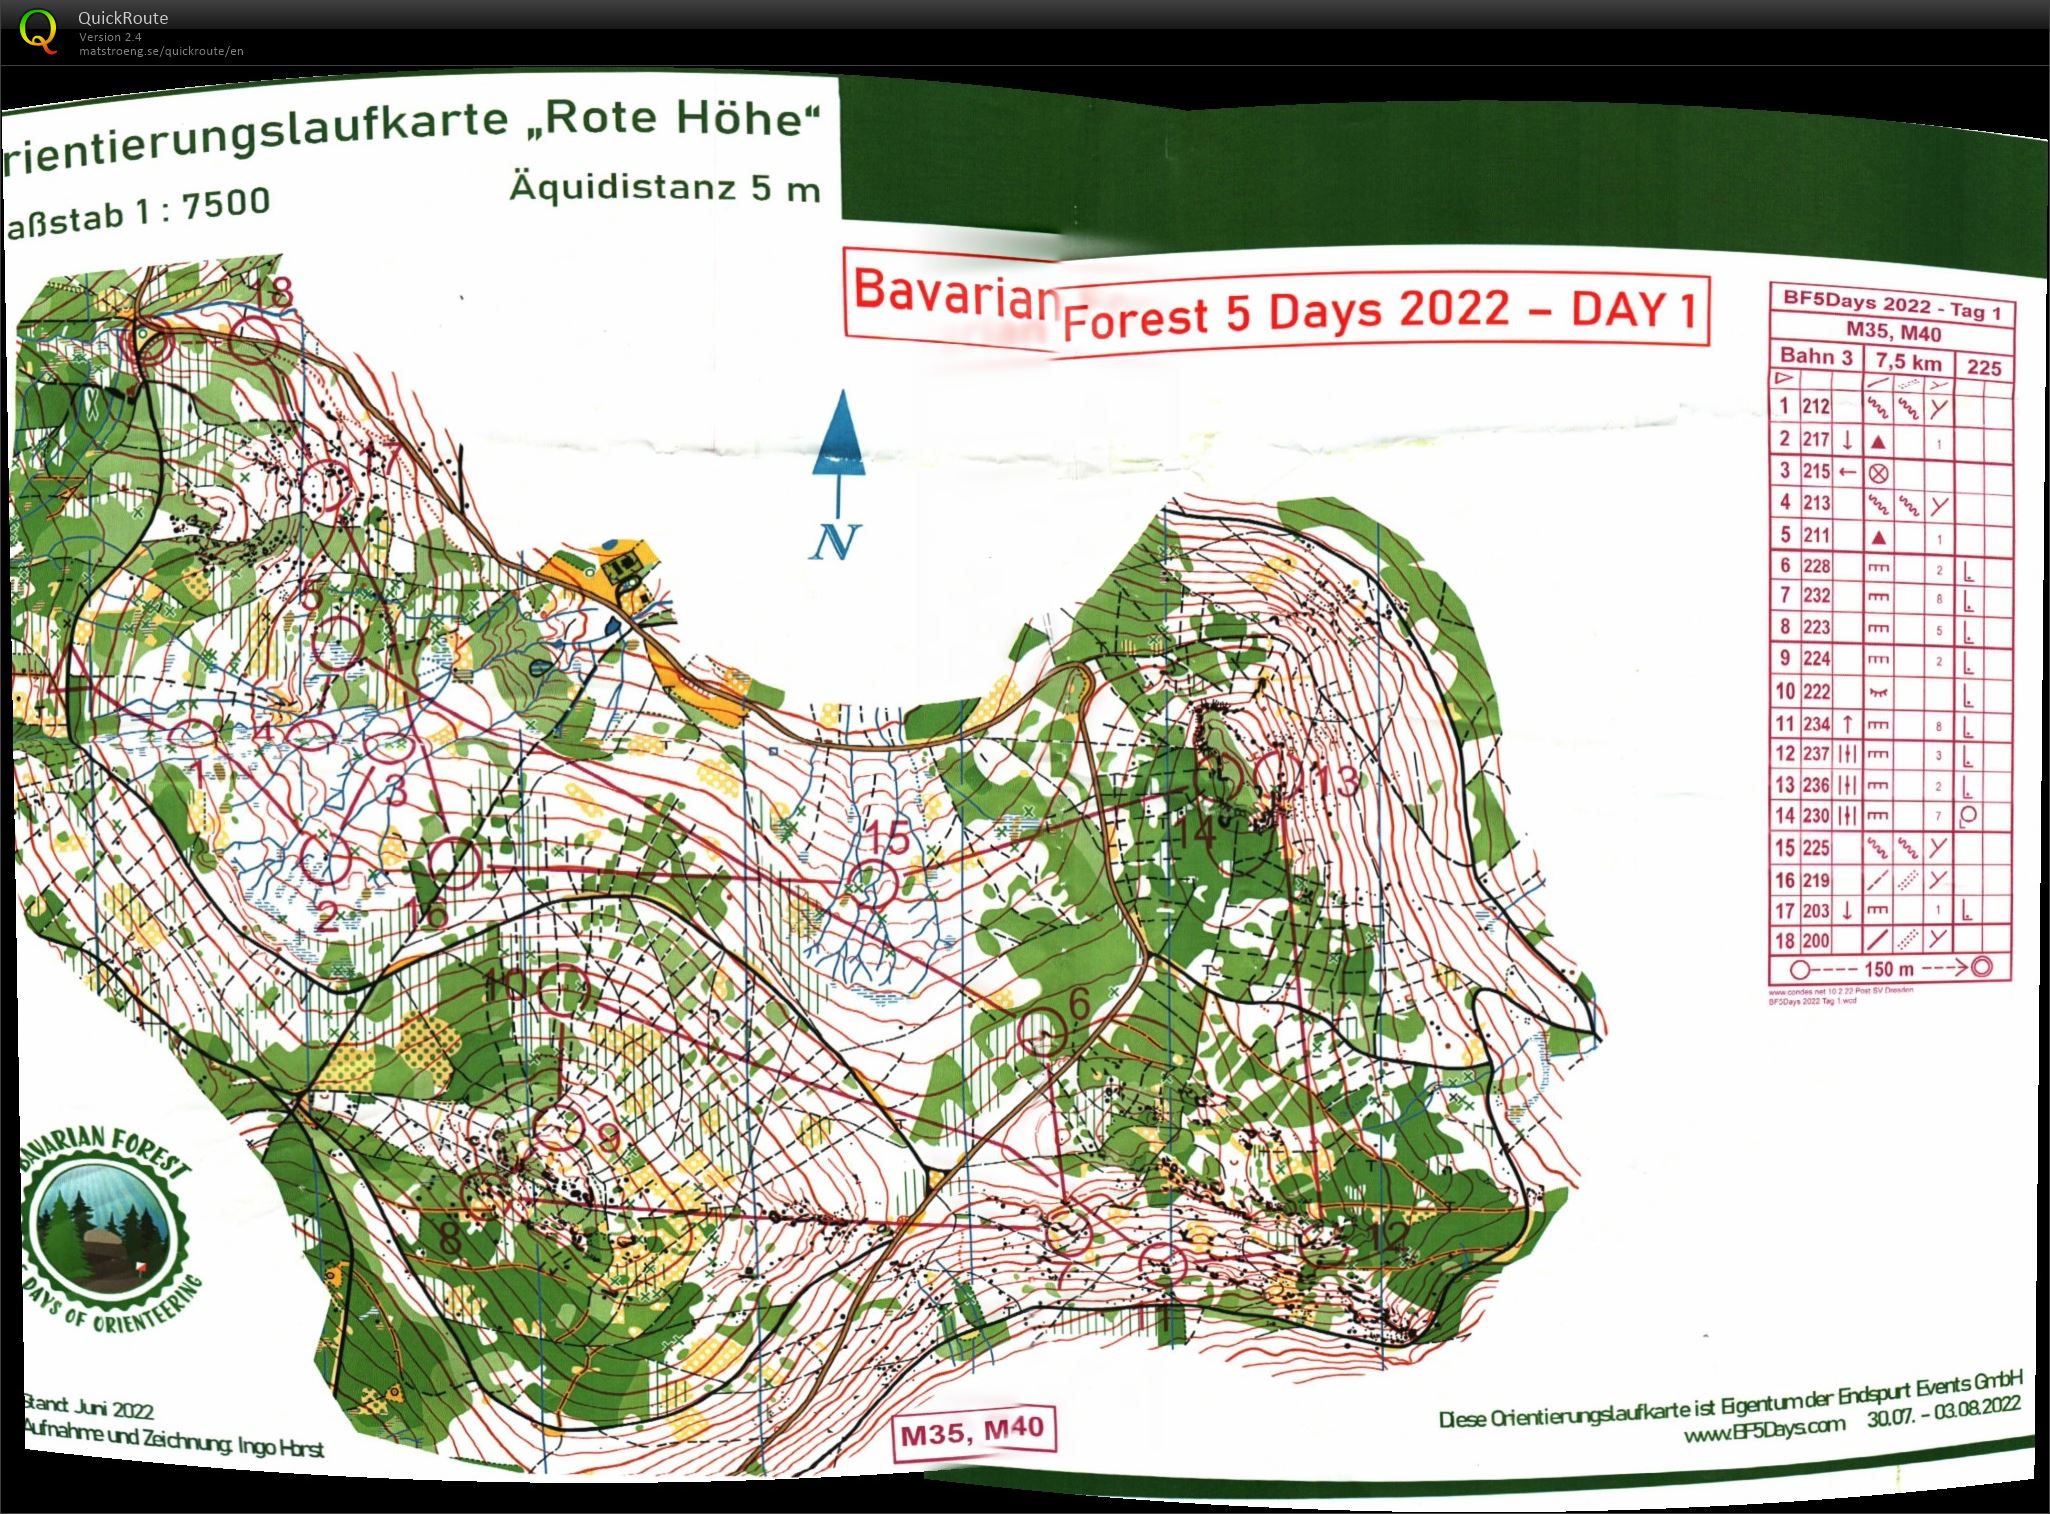 Bavarian Forest 5 Days - Day 1 (2022-07-30)